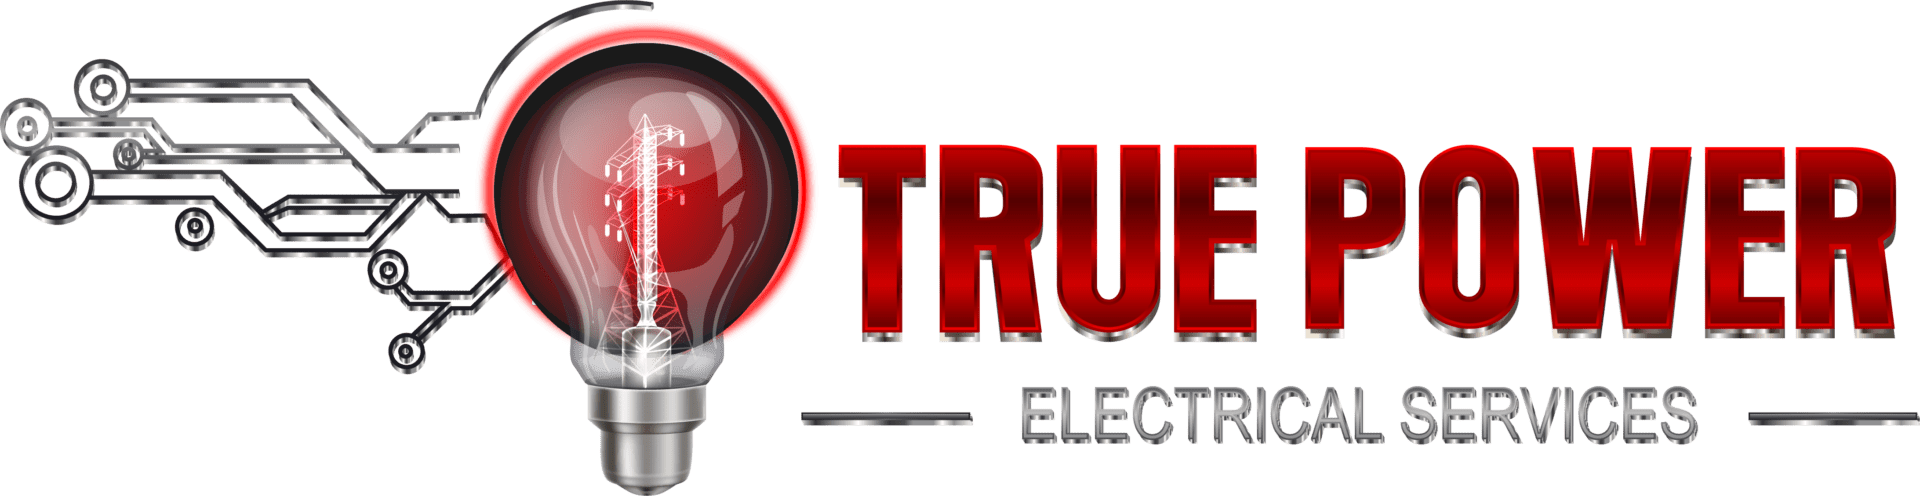 true power_Logo